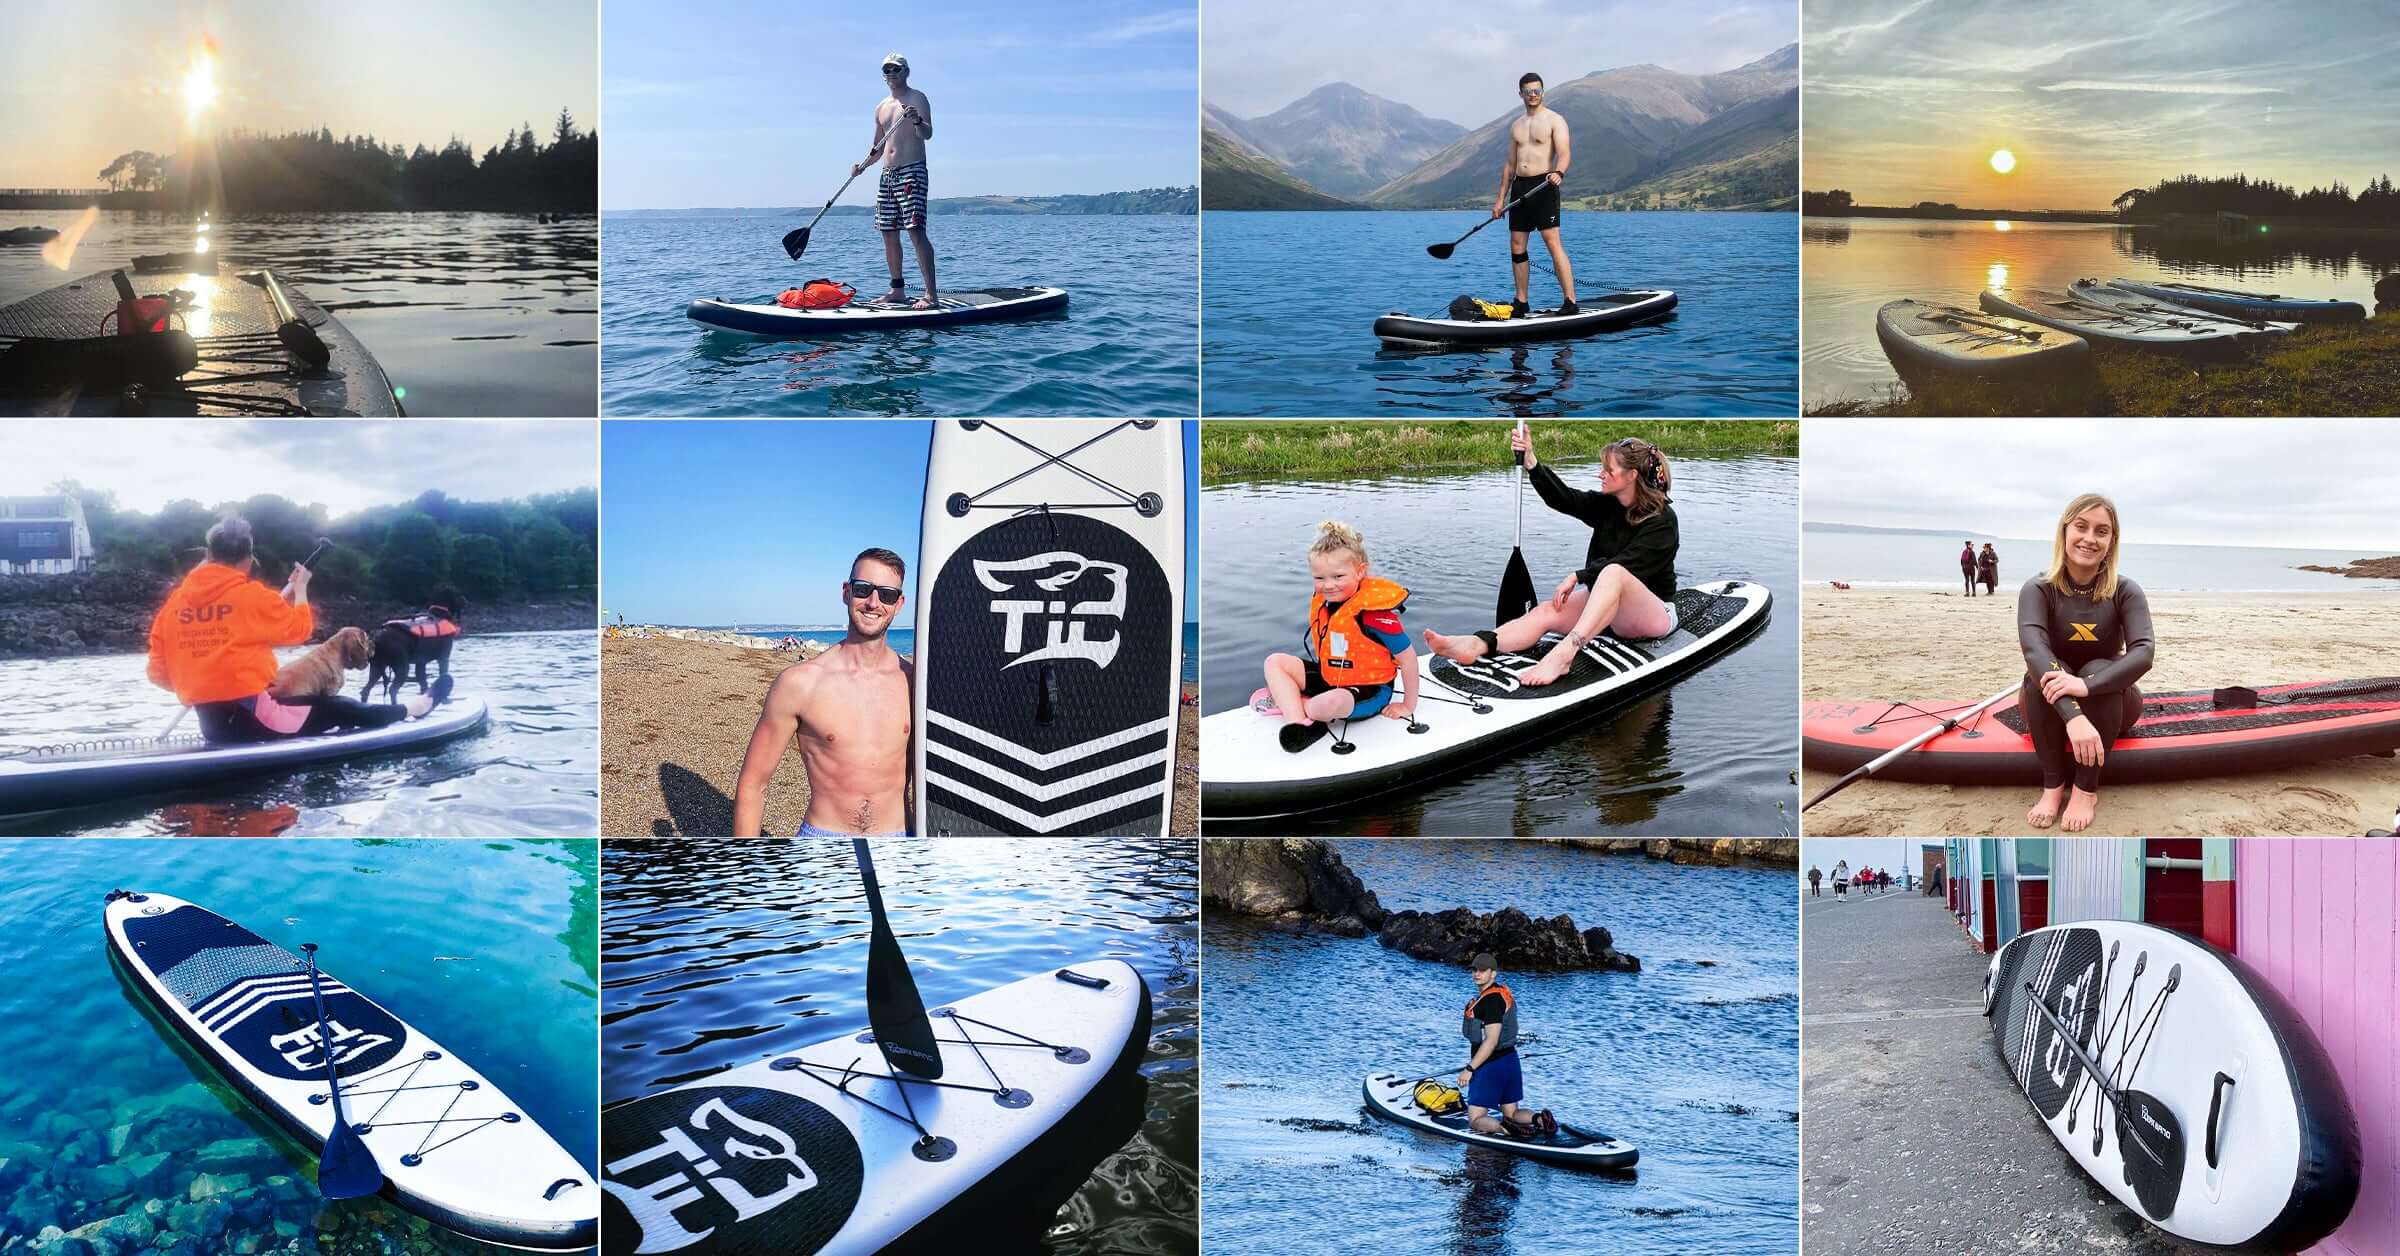 TIGERXBANG Defender Pro 10'6 Inflatable Paddle Board with Kayak Seat